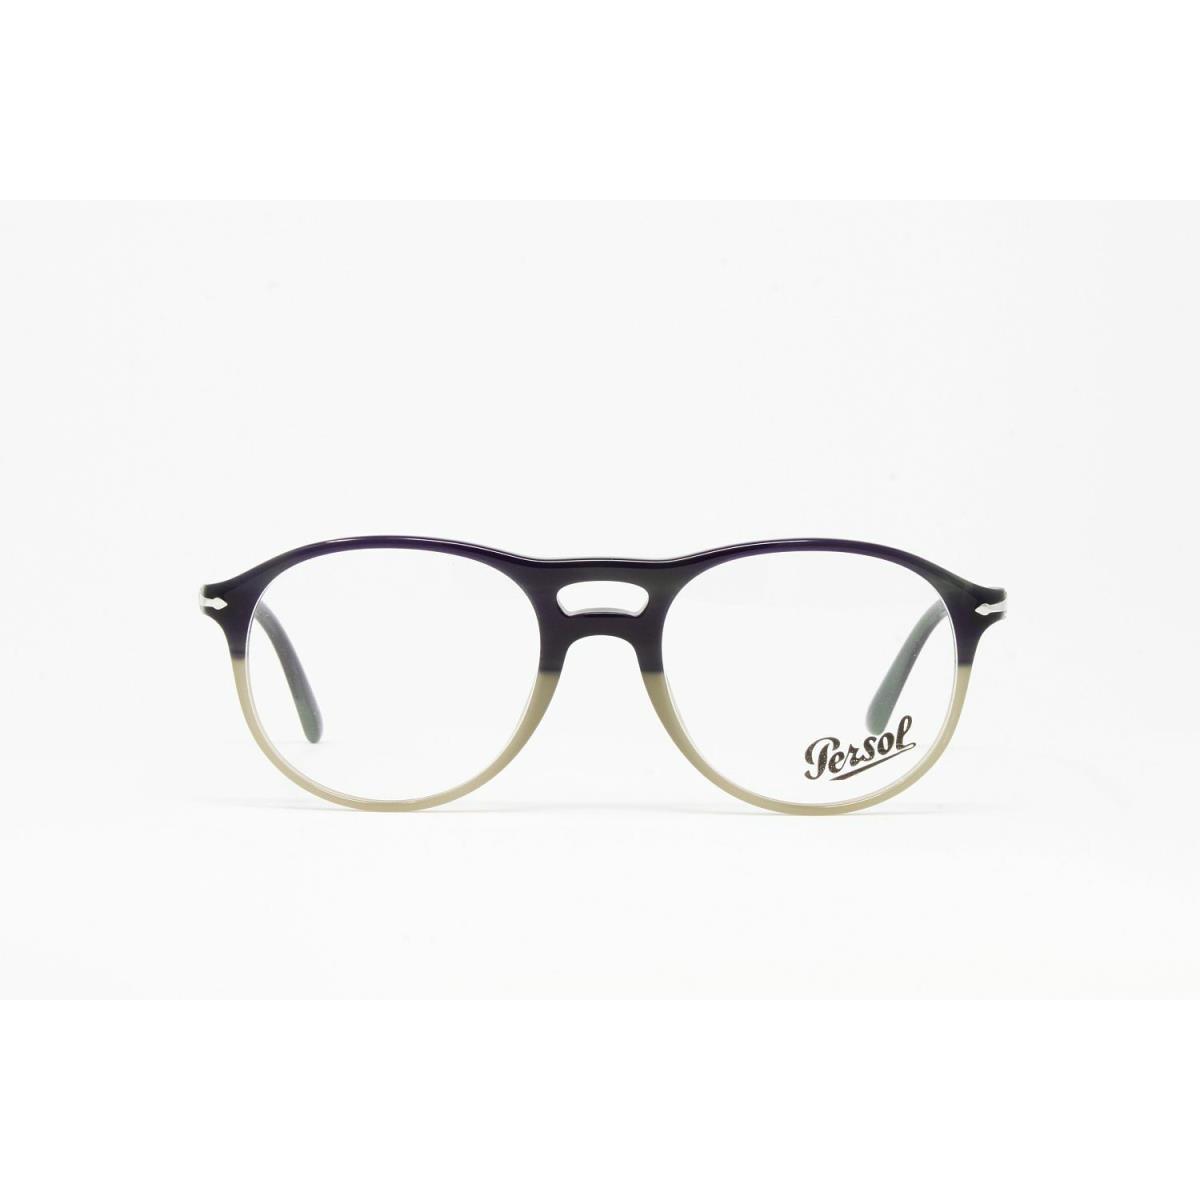 Persol eyeglasses  - Green Frame 0